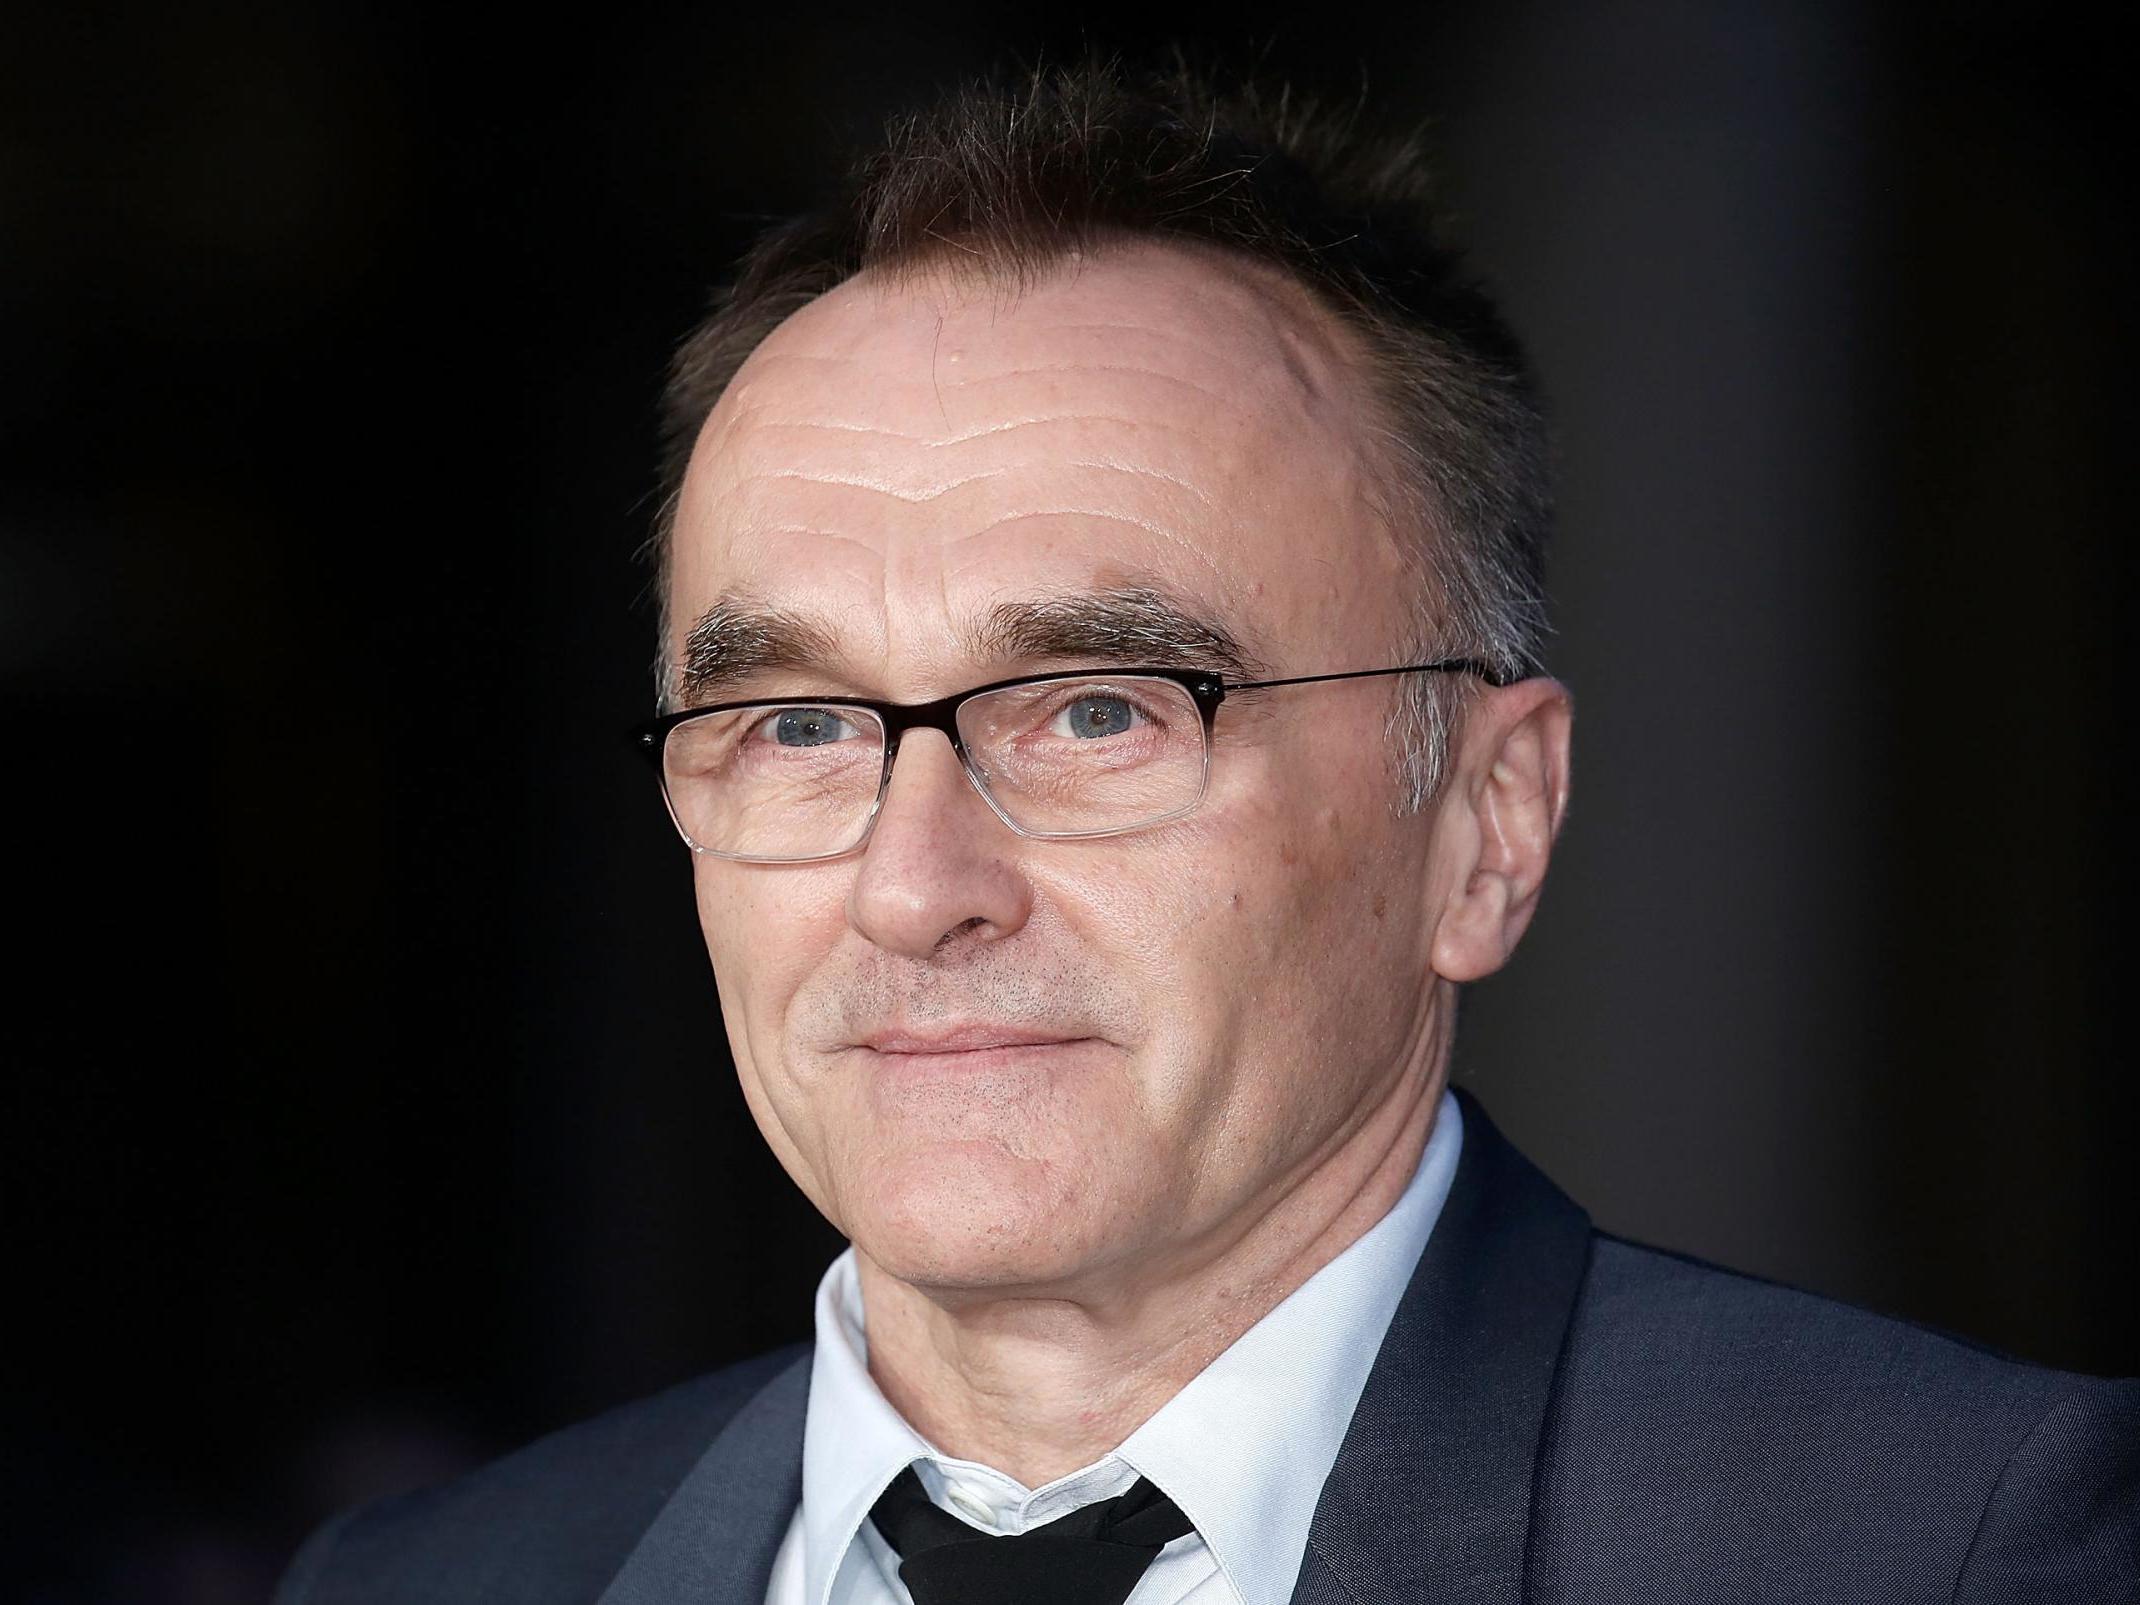 James Bond Danny Boyle says Robert Pattinson should overtake Daniel Craig as 007 The Independent